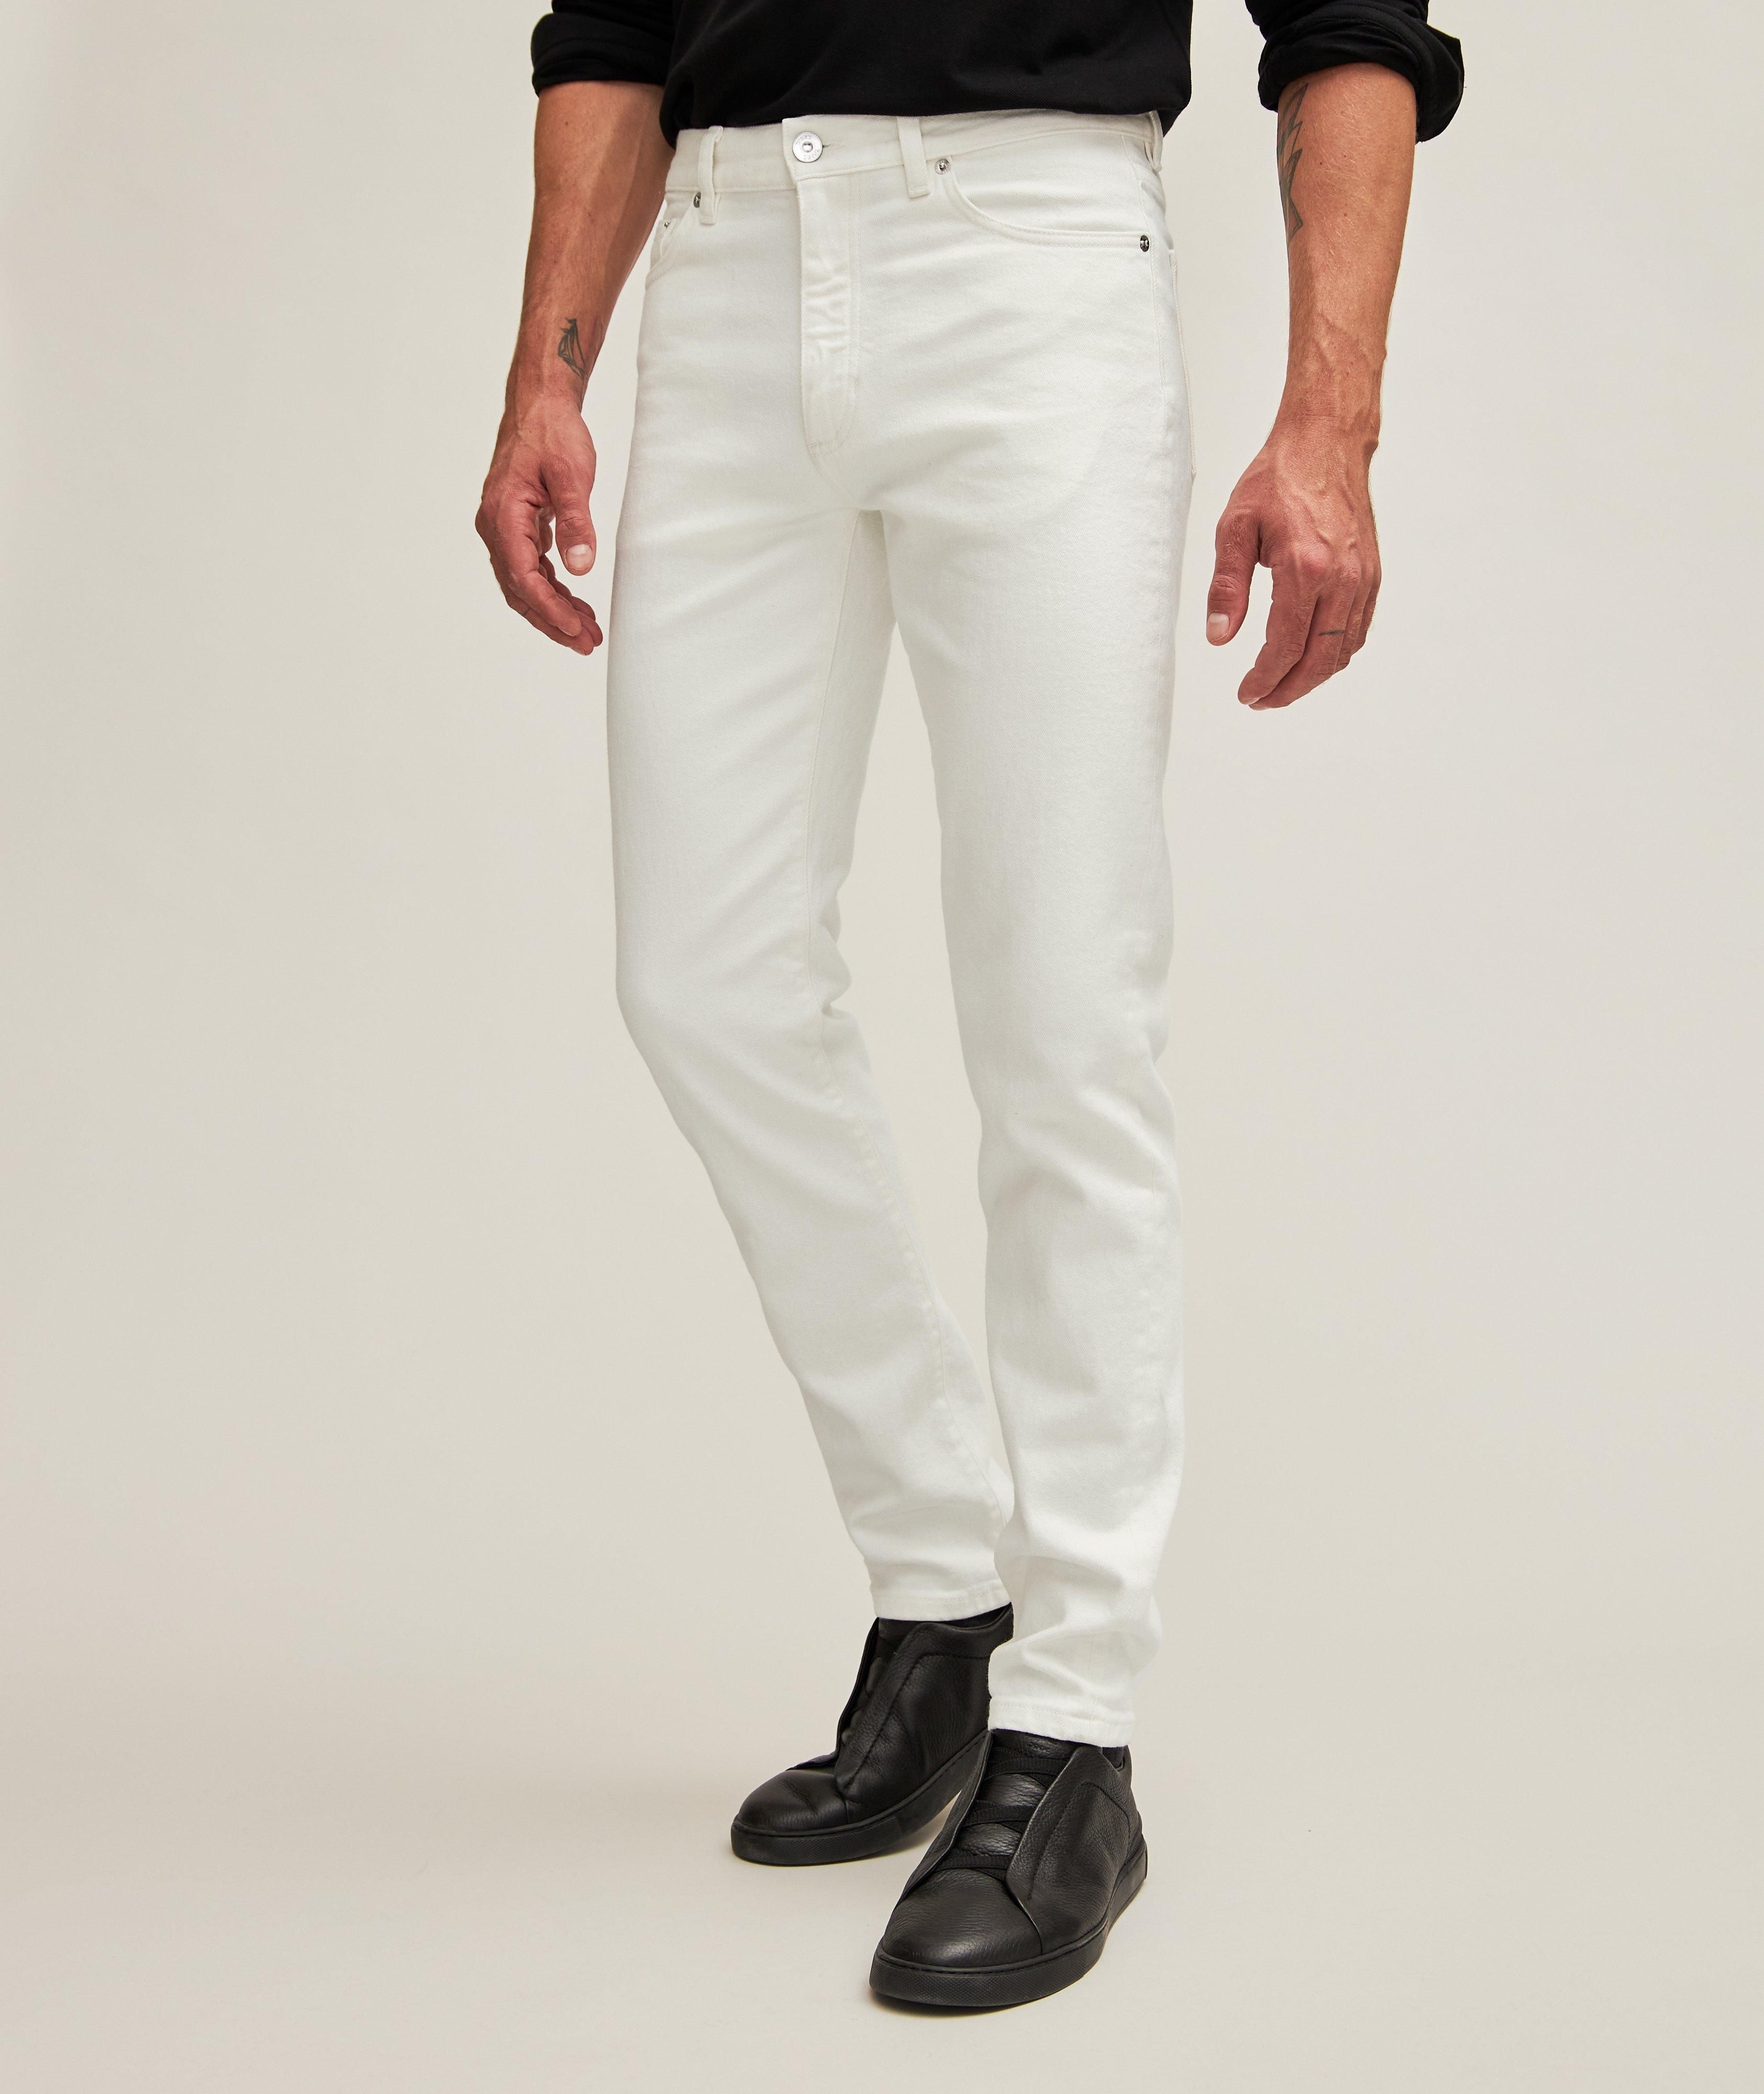 Zegna City Stretch-Cotton Five-Pocket Pants, Pants